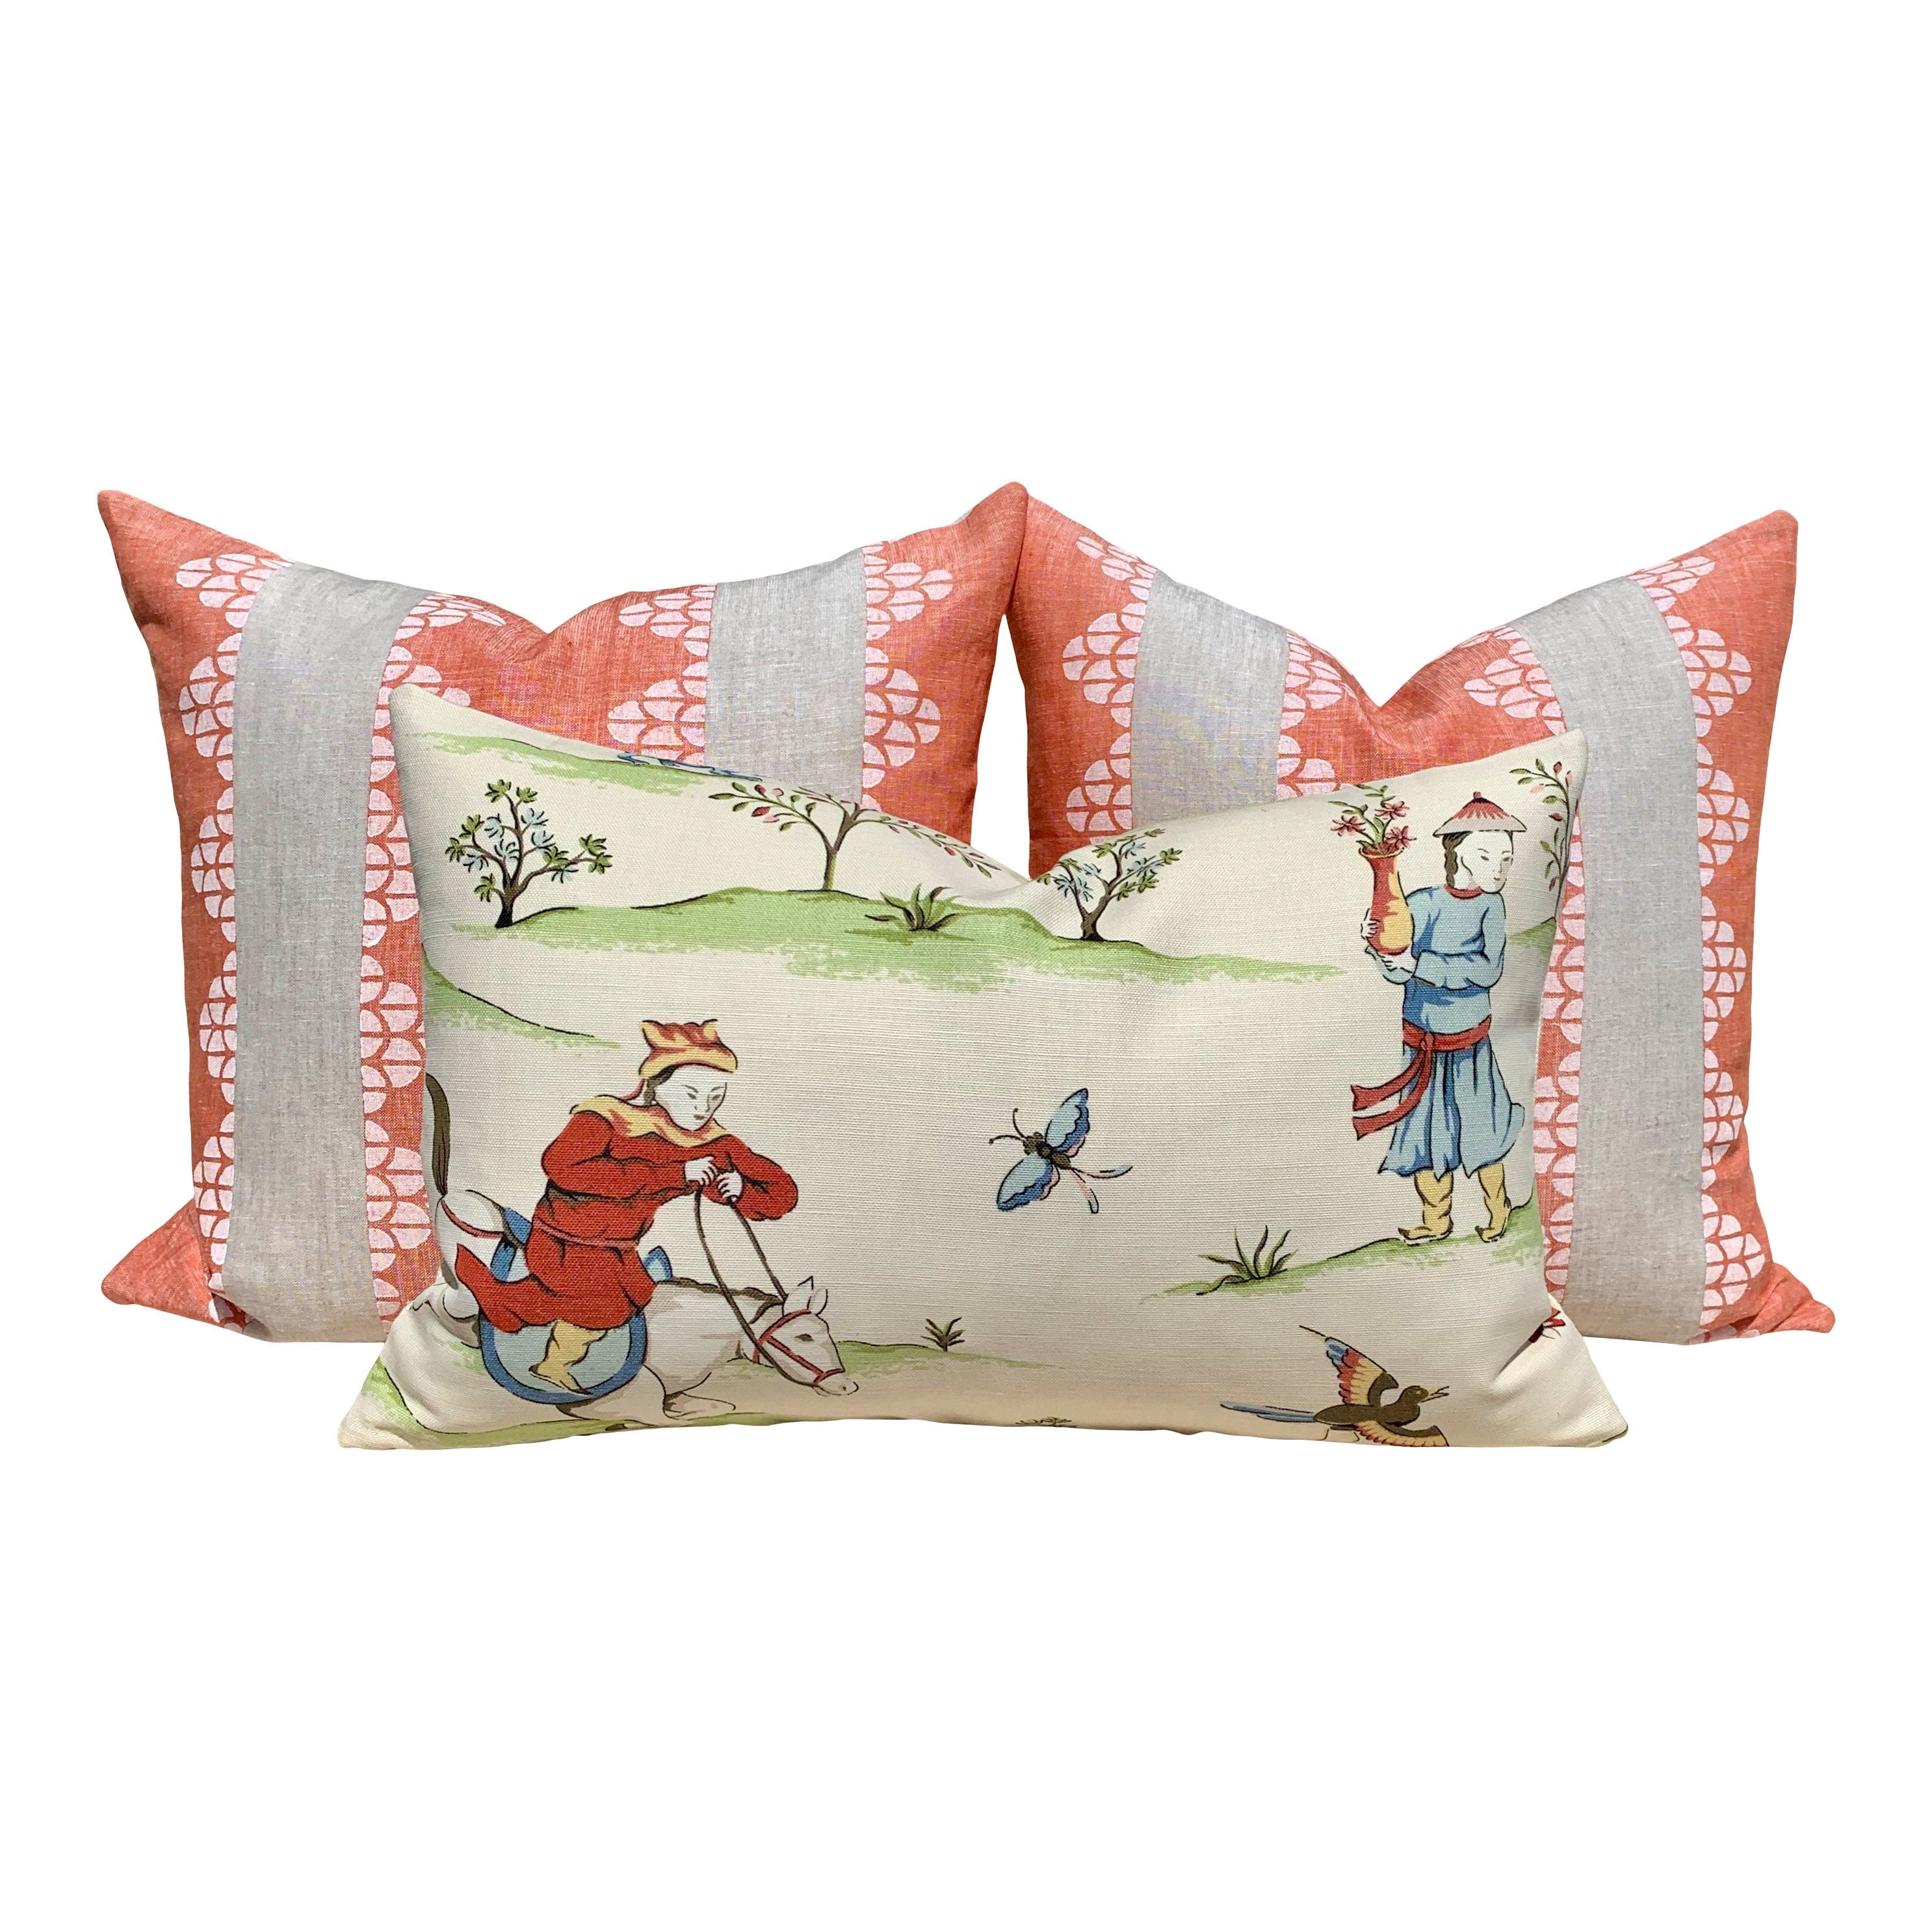 Thibaut Dhara Stripe Pillow in Coral. Lumbar Striped Accent Pillow Cover, Decorative Pillow Sham, Designer Pillows, Accent Pillow Throw